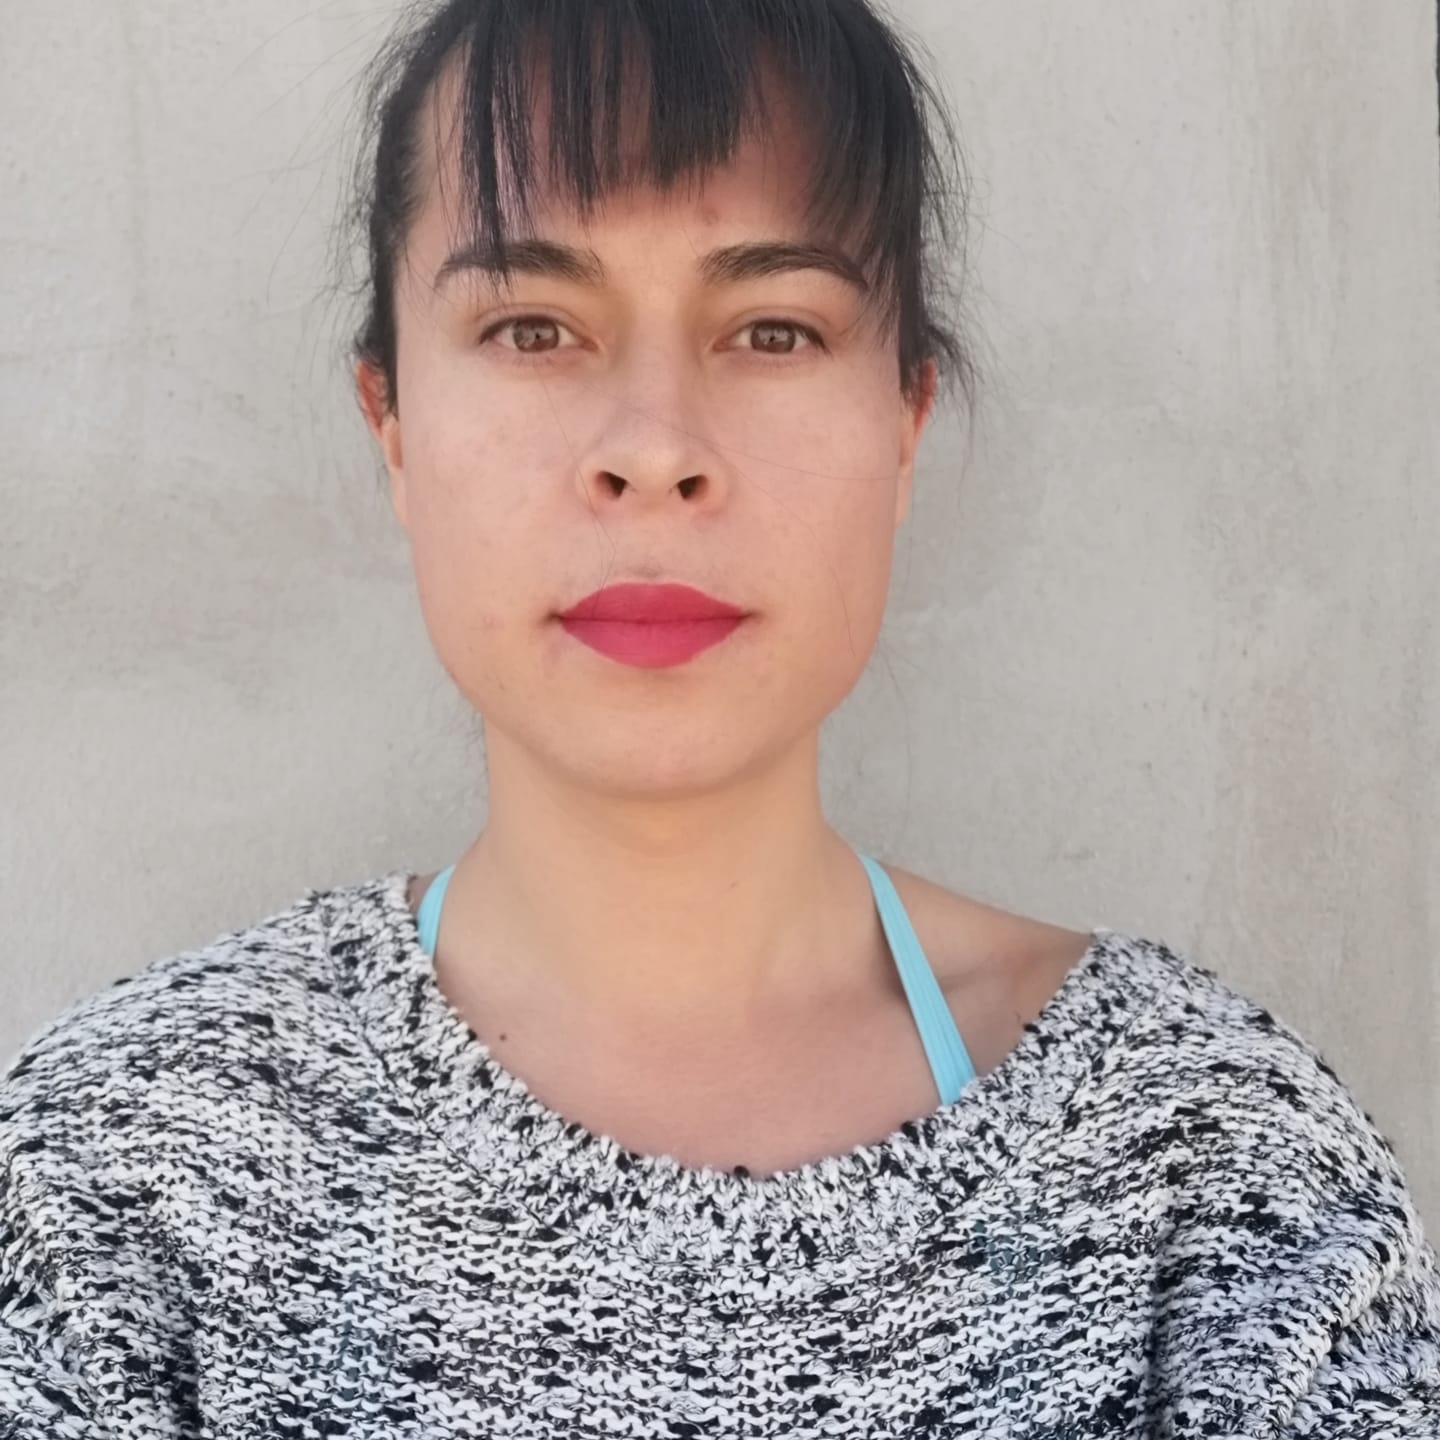 Diócesis de Querétaro niega cambio de nombre a mujer trans 